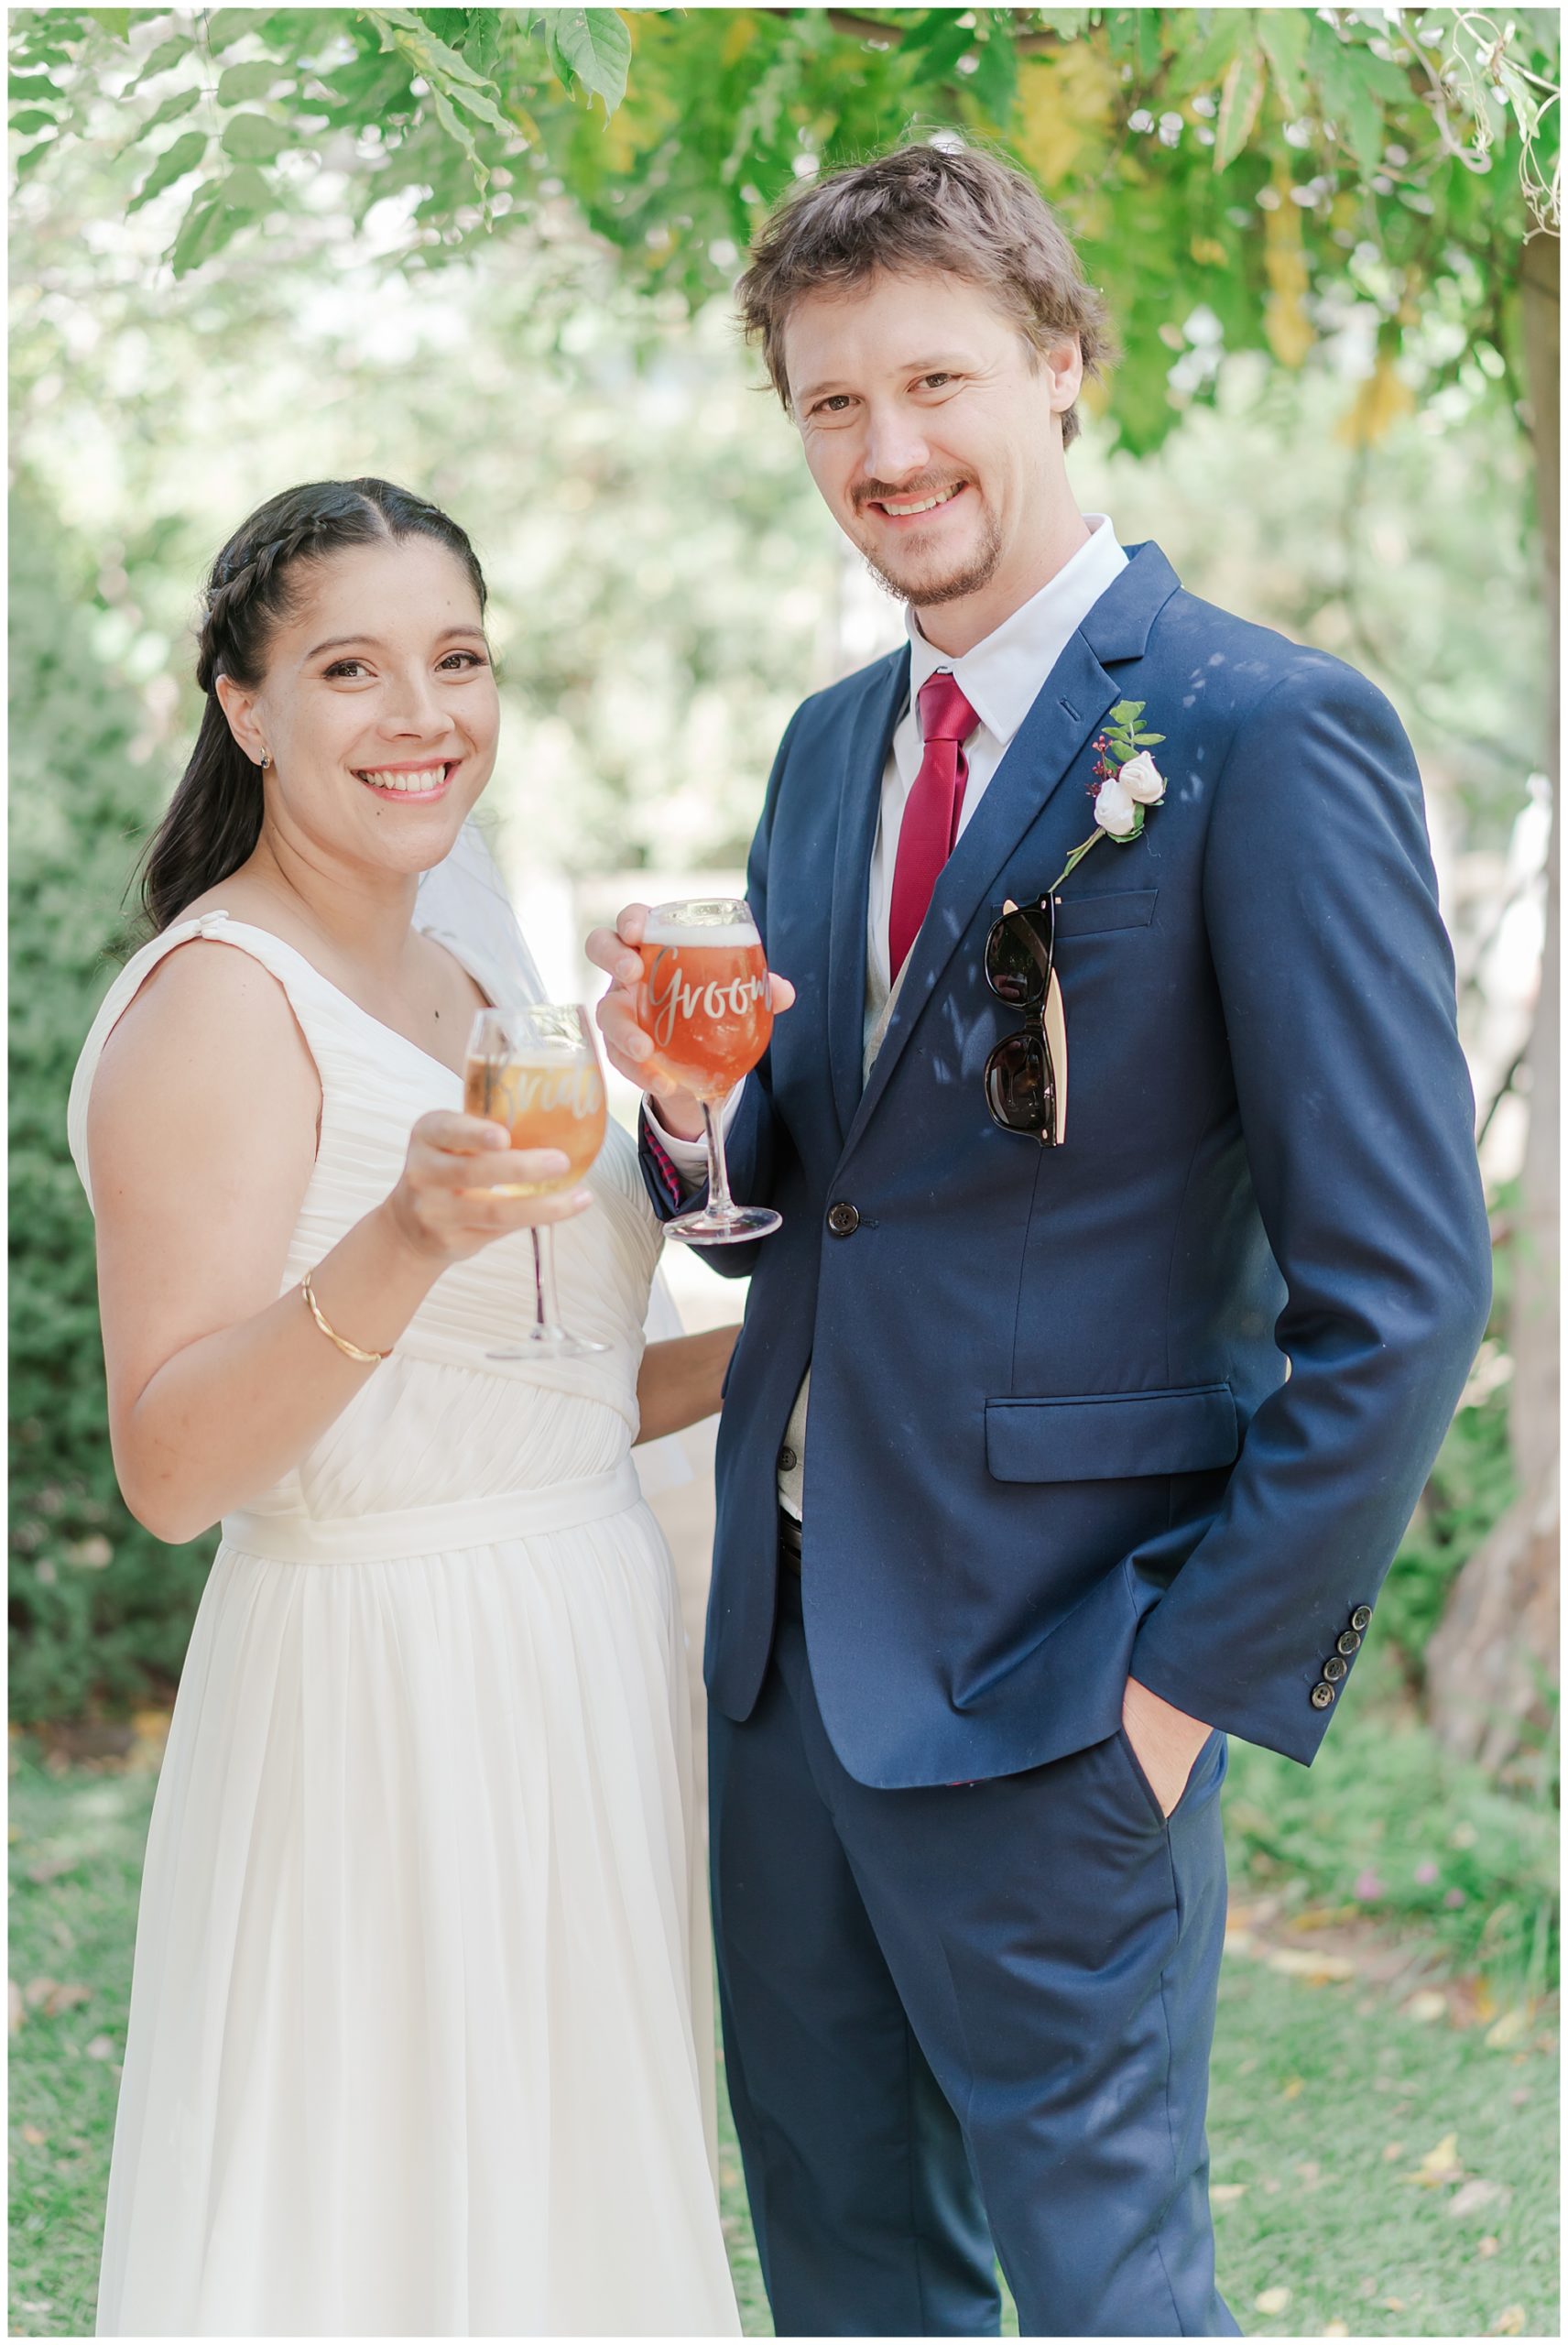 Australian Wedding photographer | Destination wedding